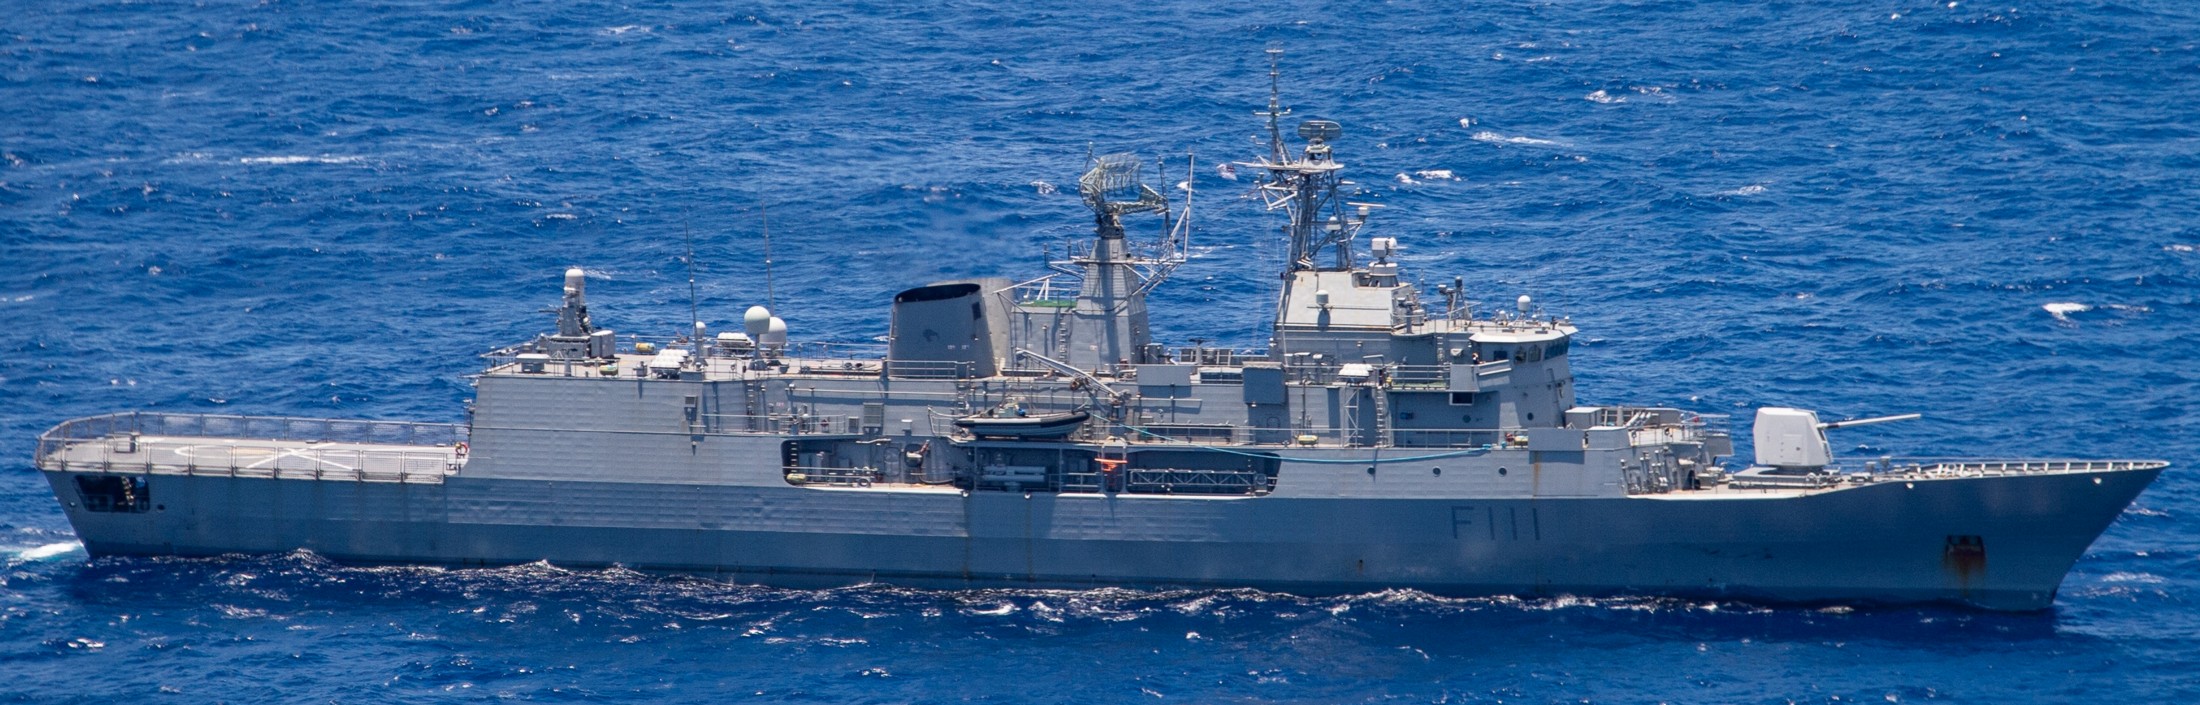 f-111 hmnzs te mana anzac class frigate royal new zealand navy rnzn 44